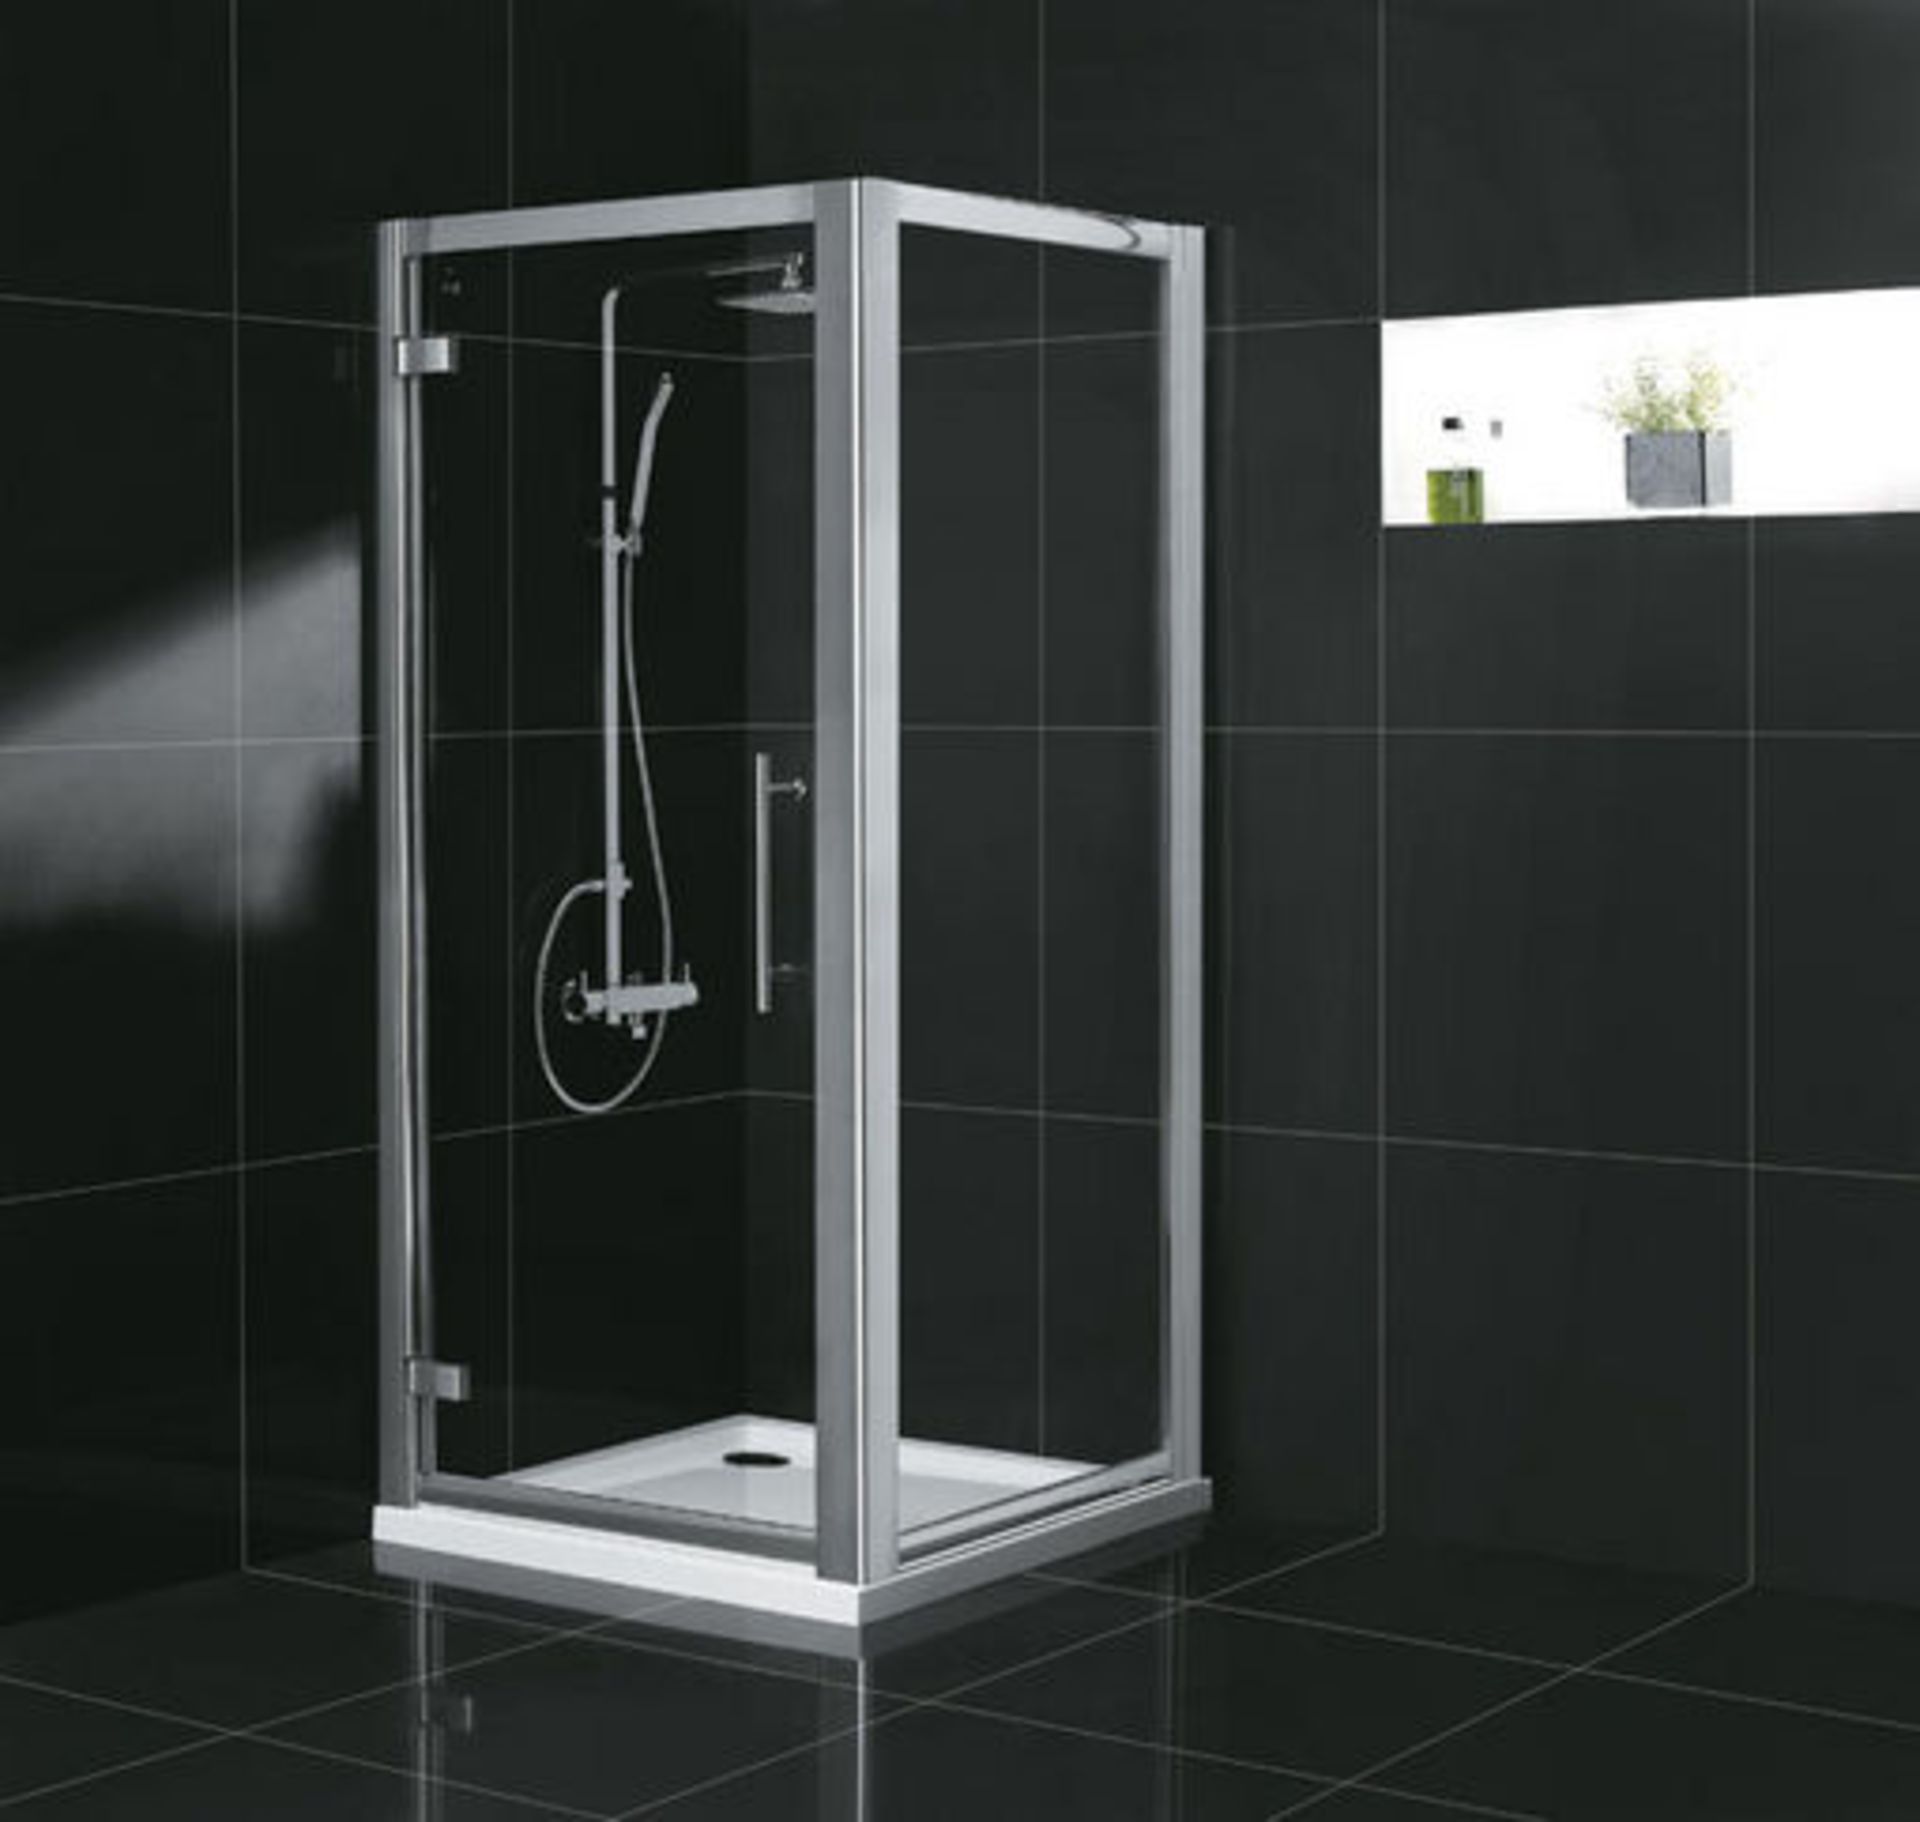 1 x Vogue Bathrooms Aqua Latus 760x760 Shower Enclosure - Includes 760 Hinged Shower Door and 760 - Image 7 of 7